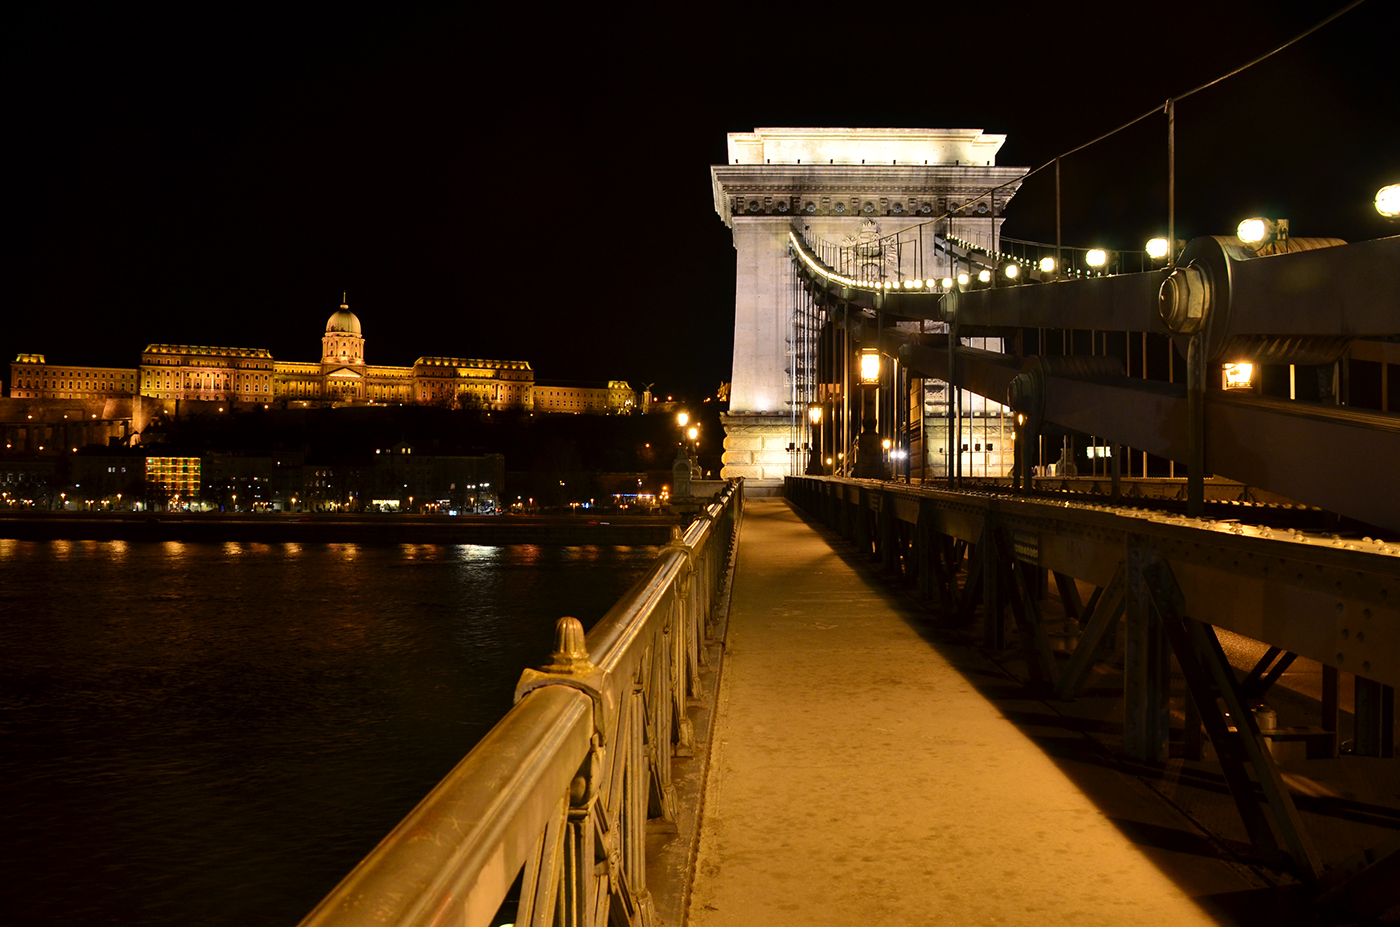 budapest Danube river night photos Suspension Bridge Europe hungary World Travel suspension bridges lights Slow shutterspeed